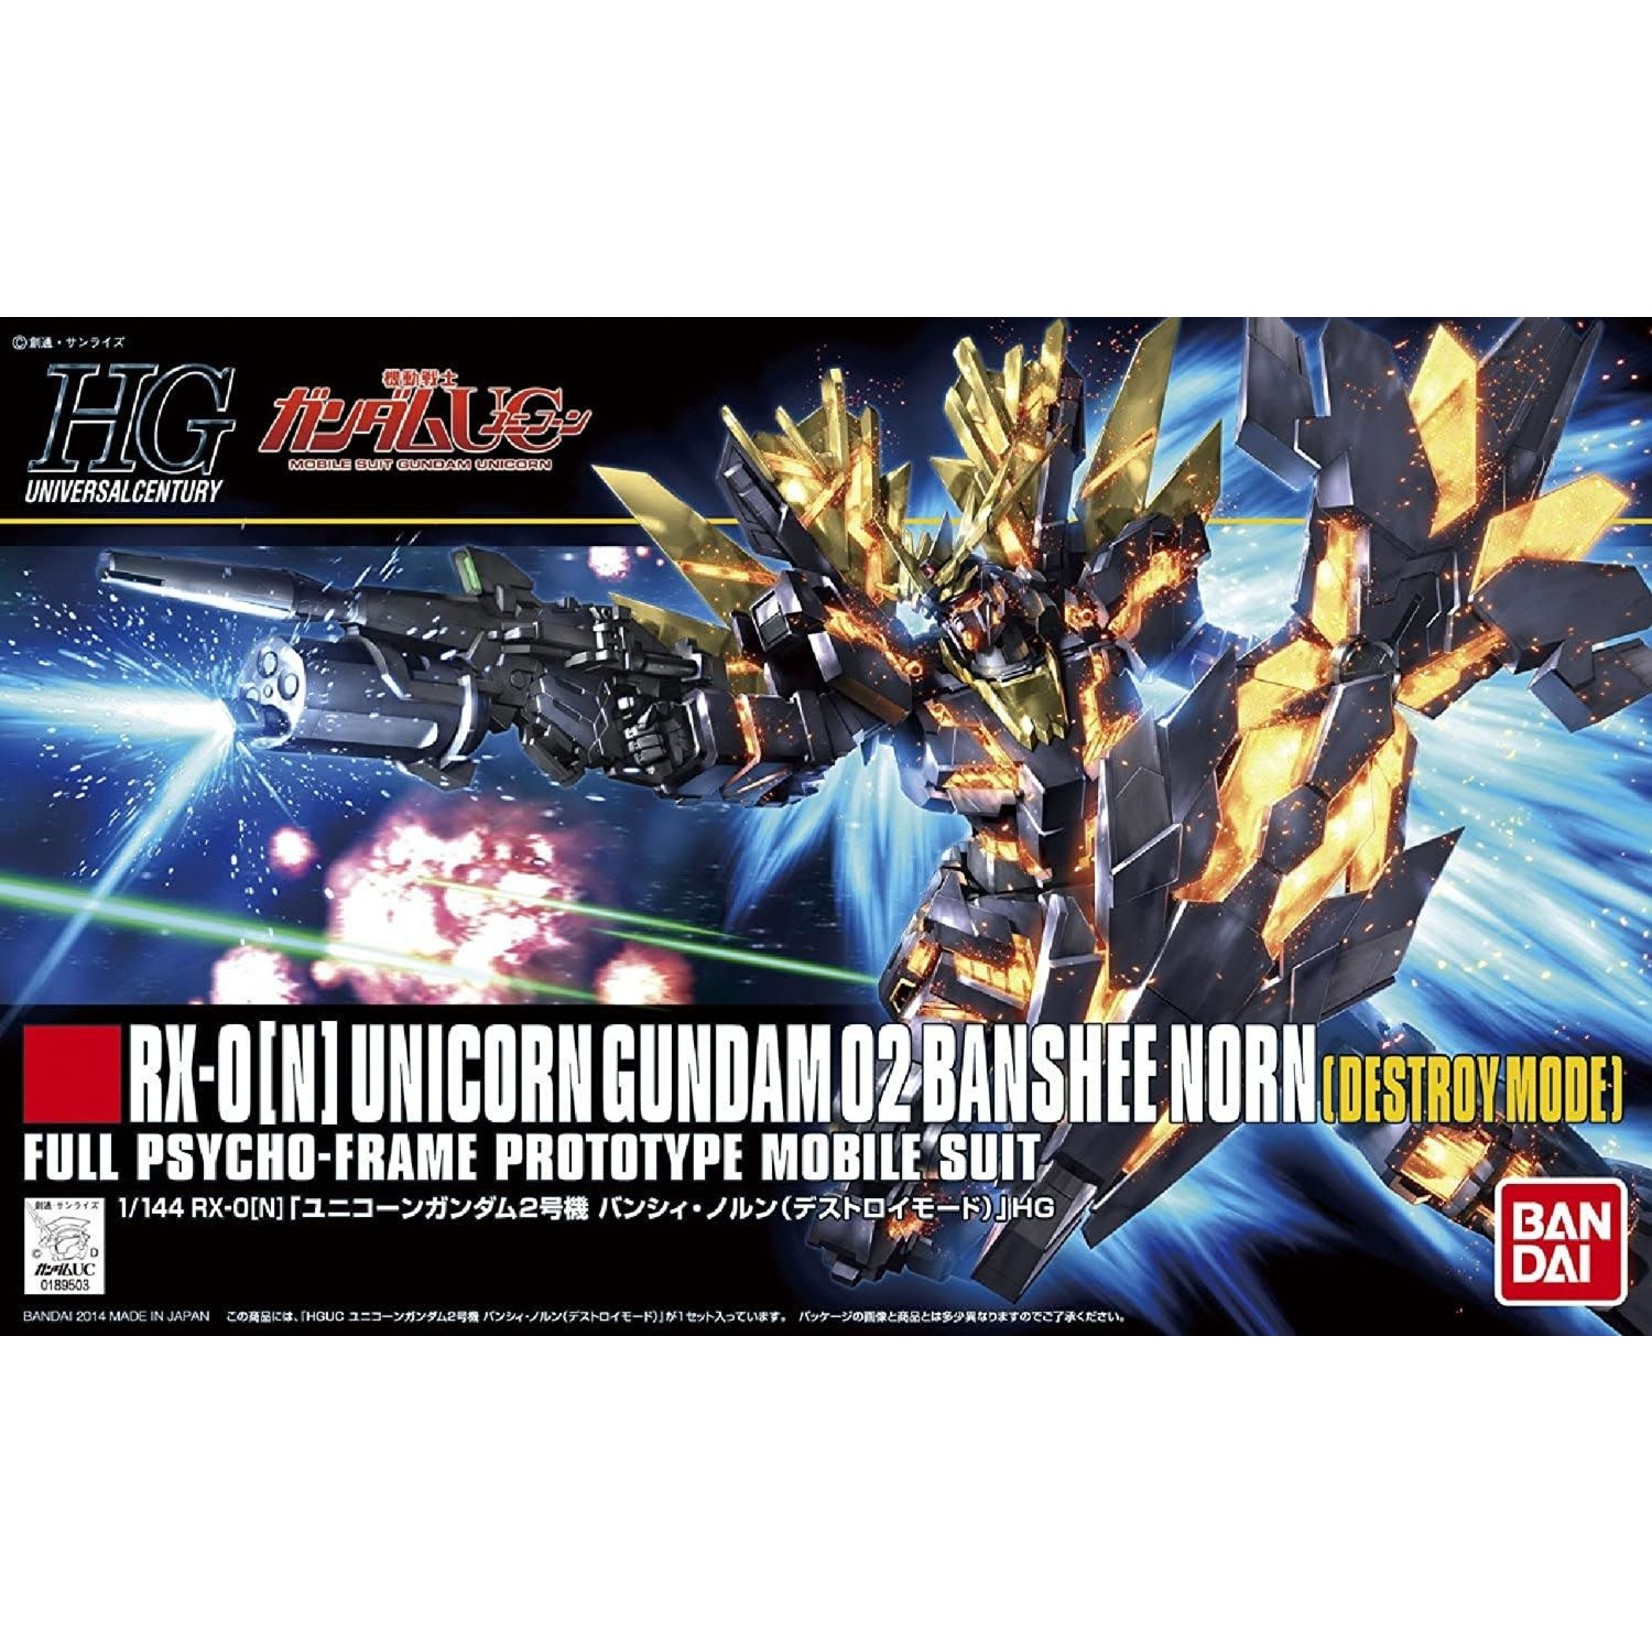 Bandai Bandai 2246116 HG #175 Unicorn Gundam 02 Banshee Norn (Destroy Mode) "Gundam UC"